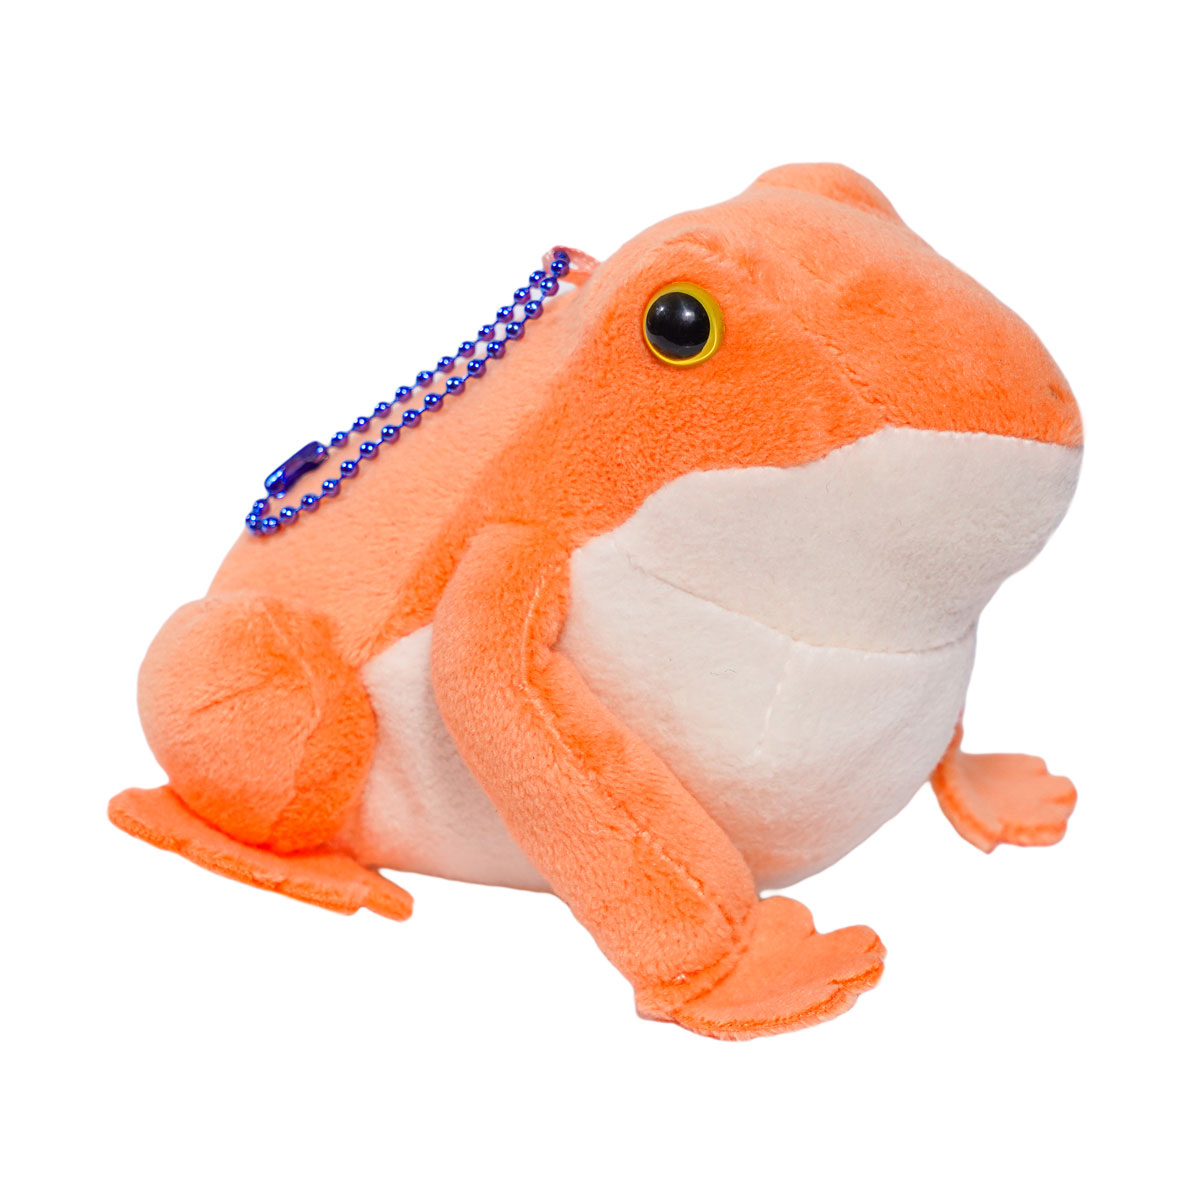 Frog Plush Toy Kawaii Stuffed Animal Orange Keychain Size 3